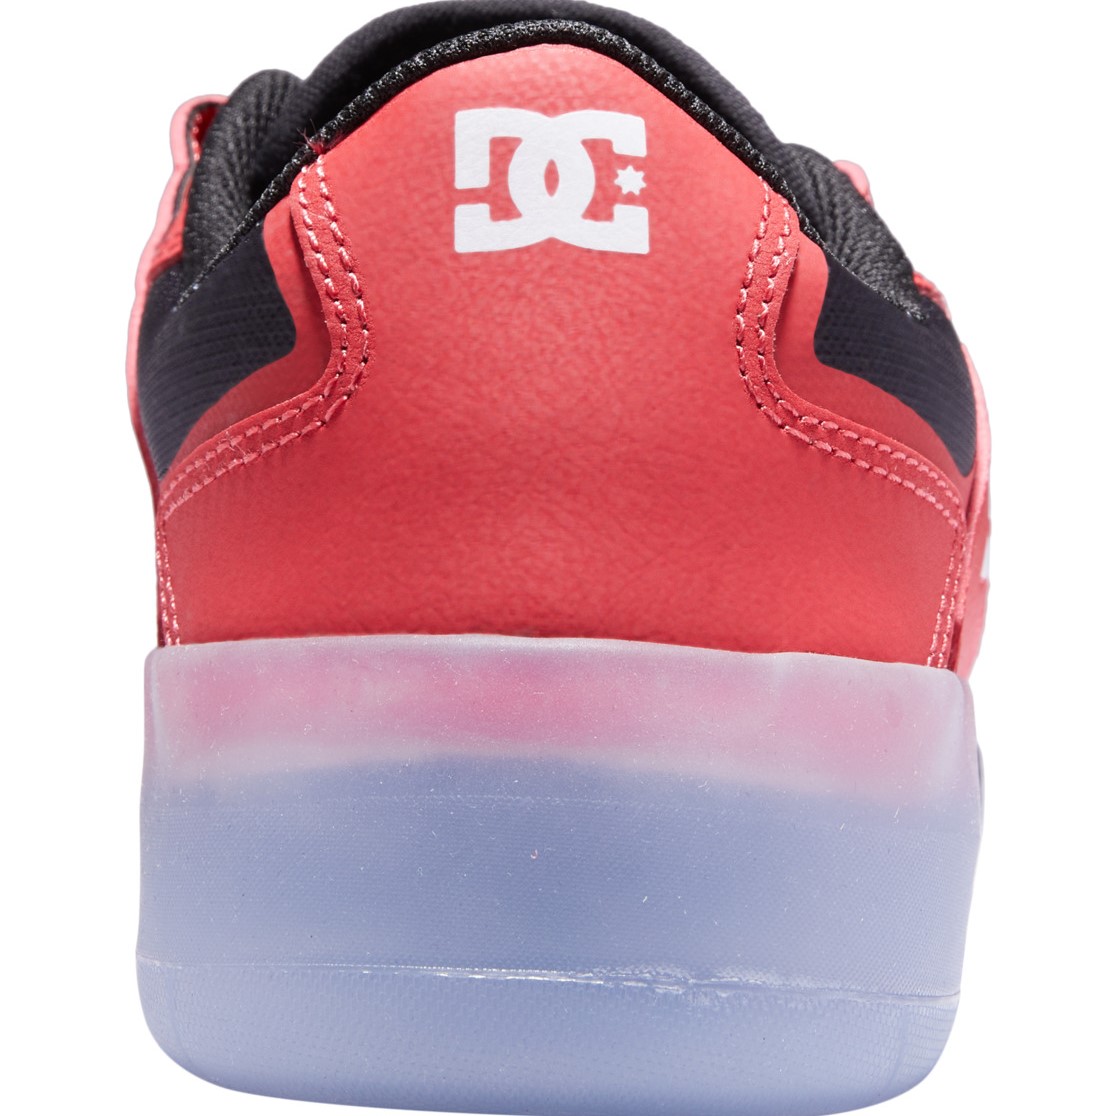 DC Metric Le Skate Shoes